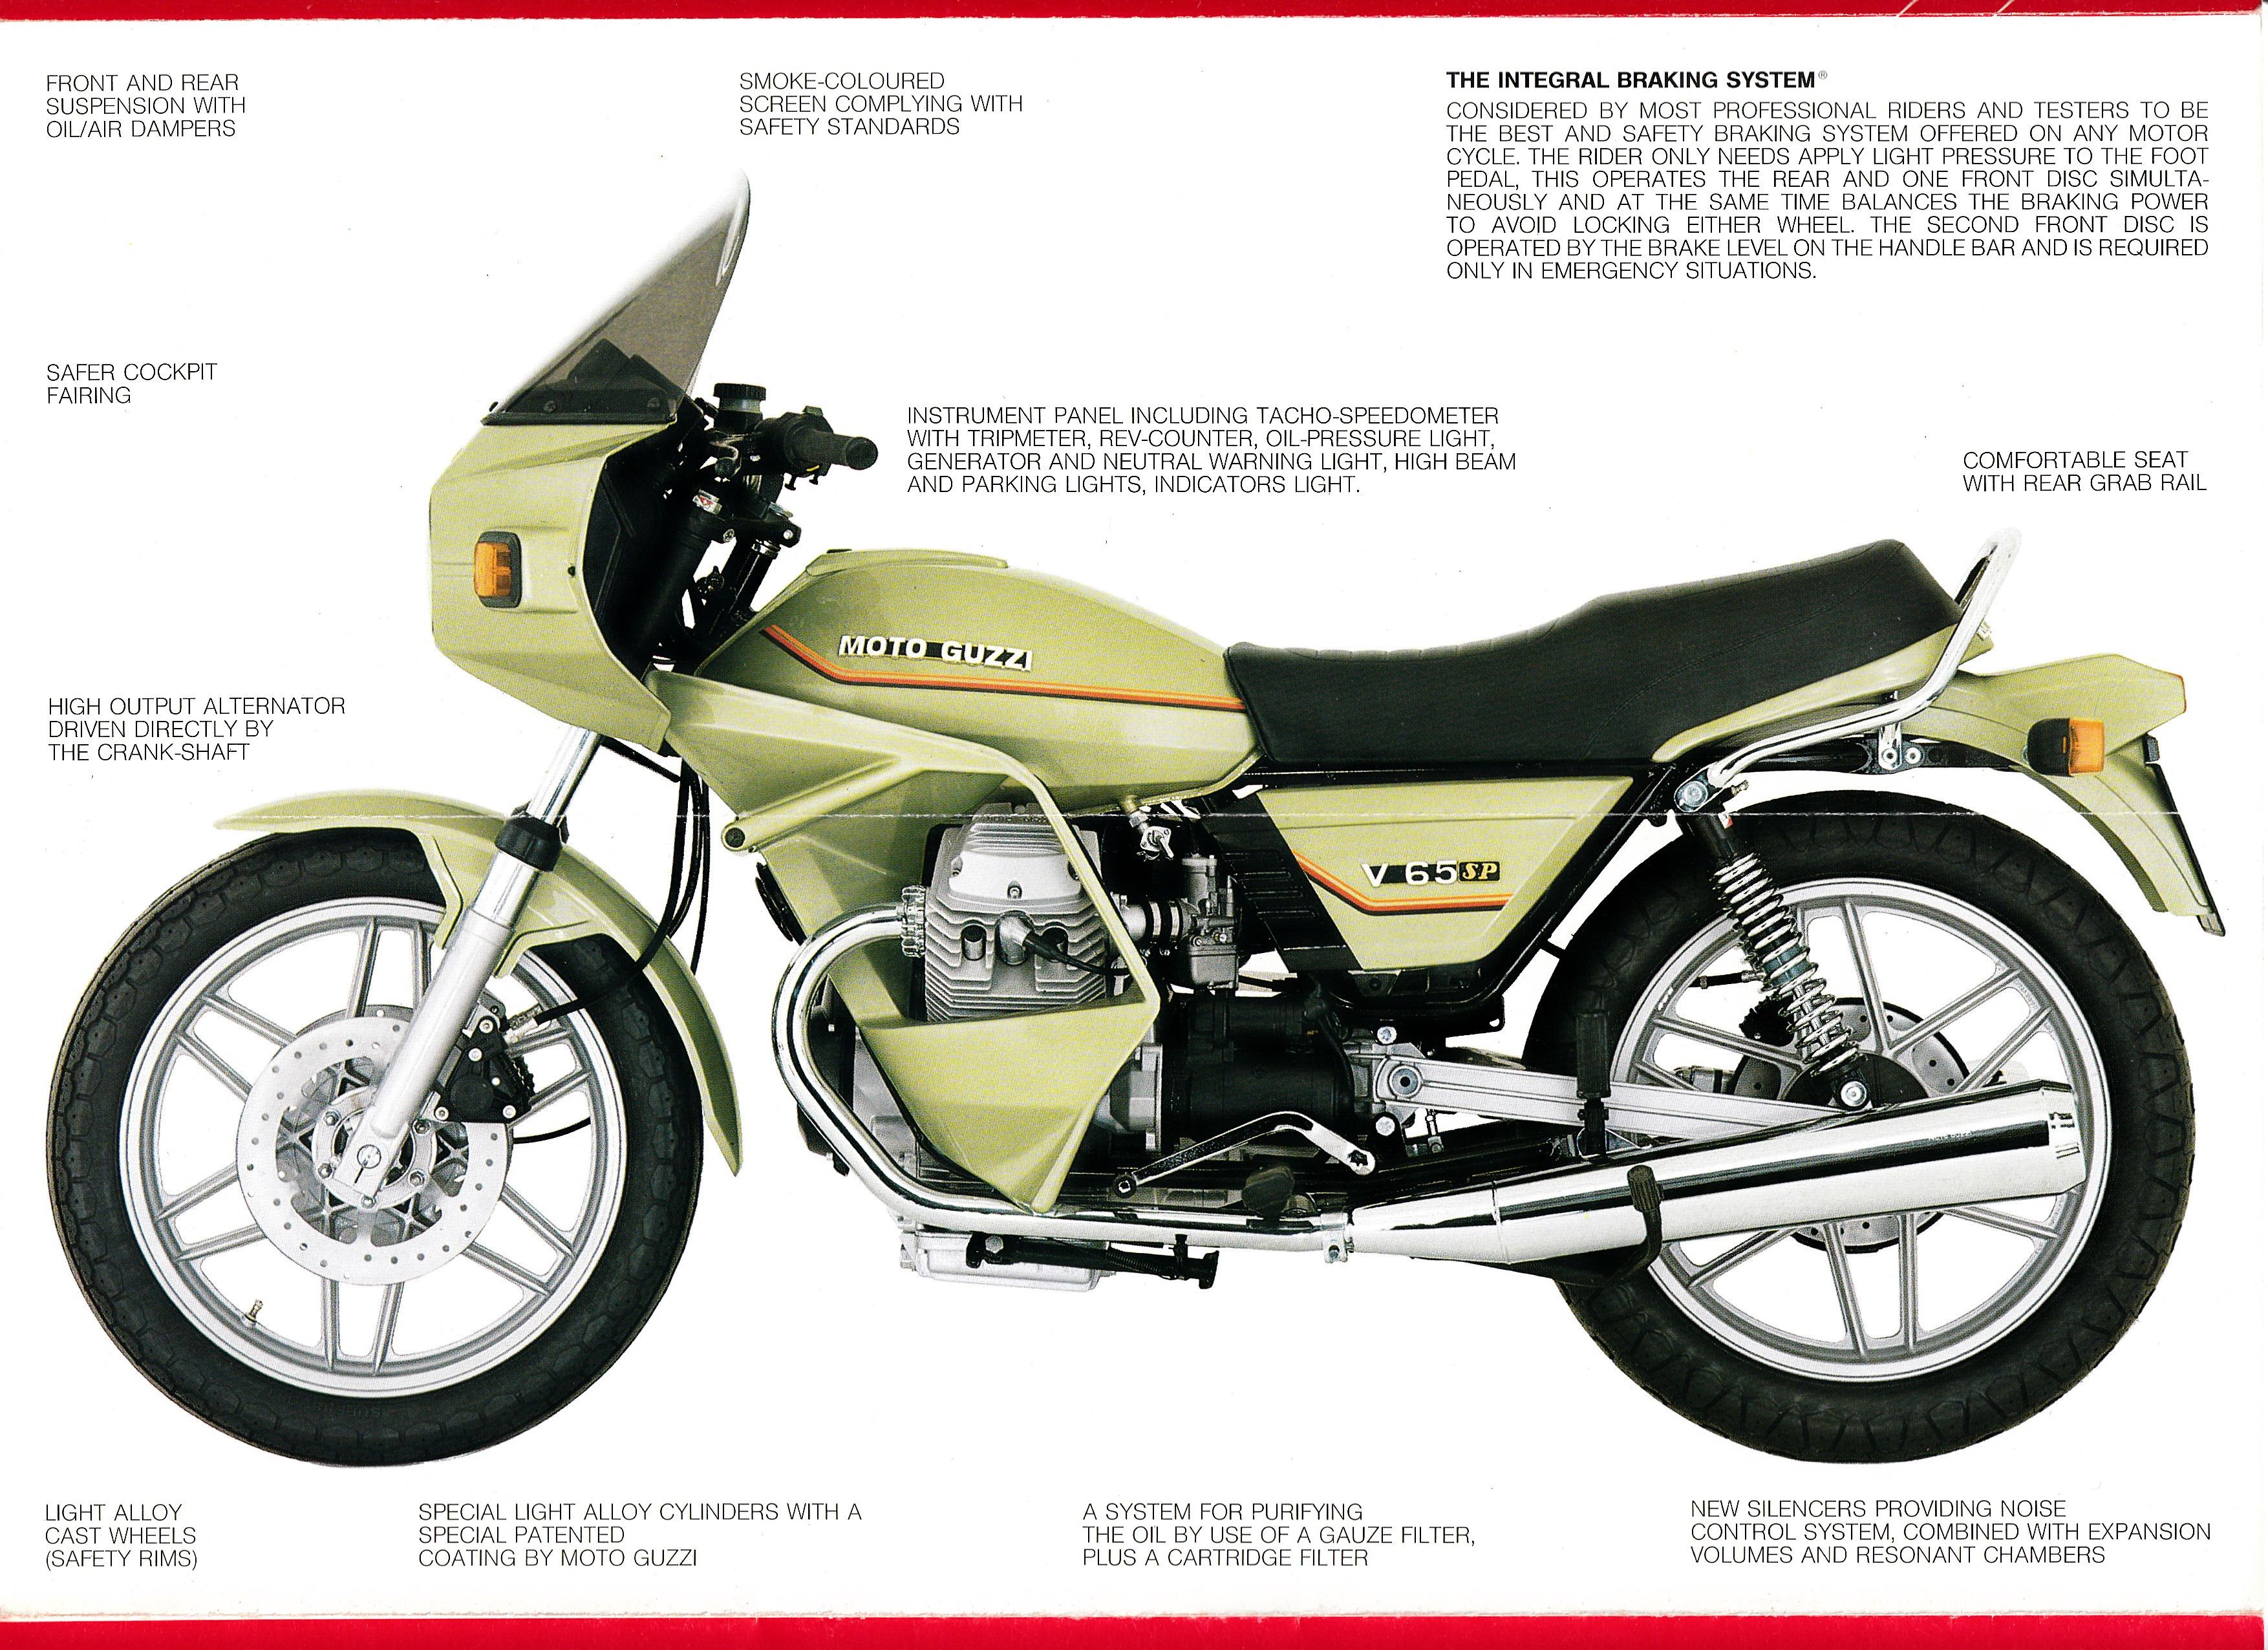 Brochure - Moto Guzzi V65 SP (folded style brochure)